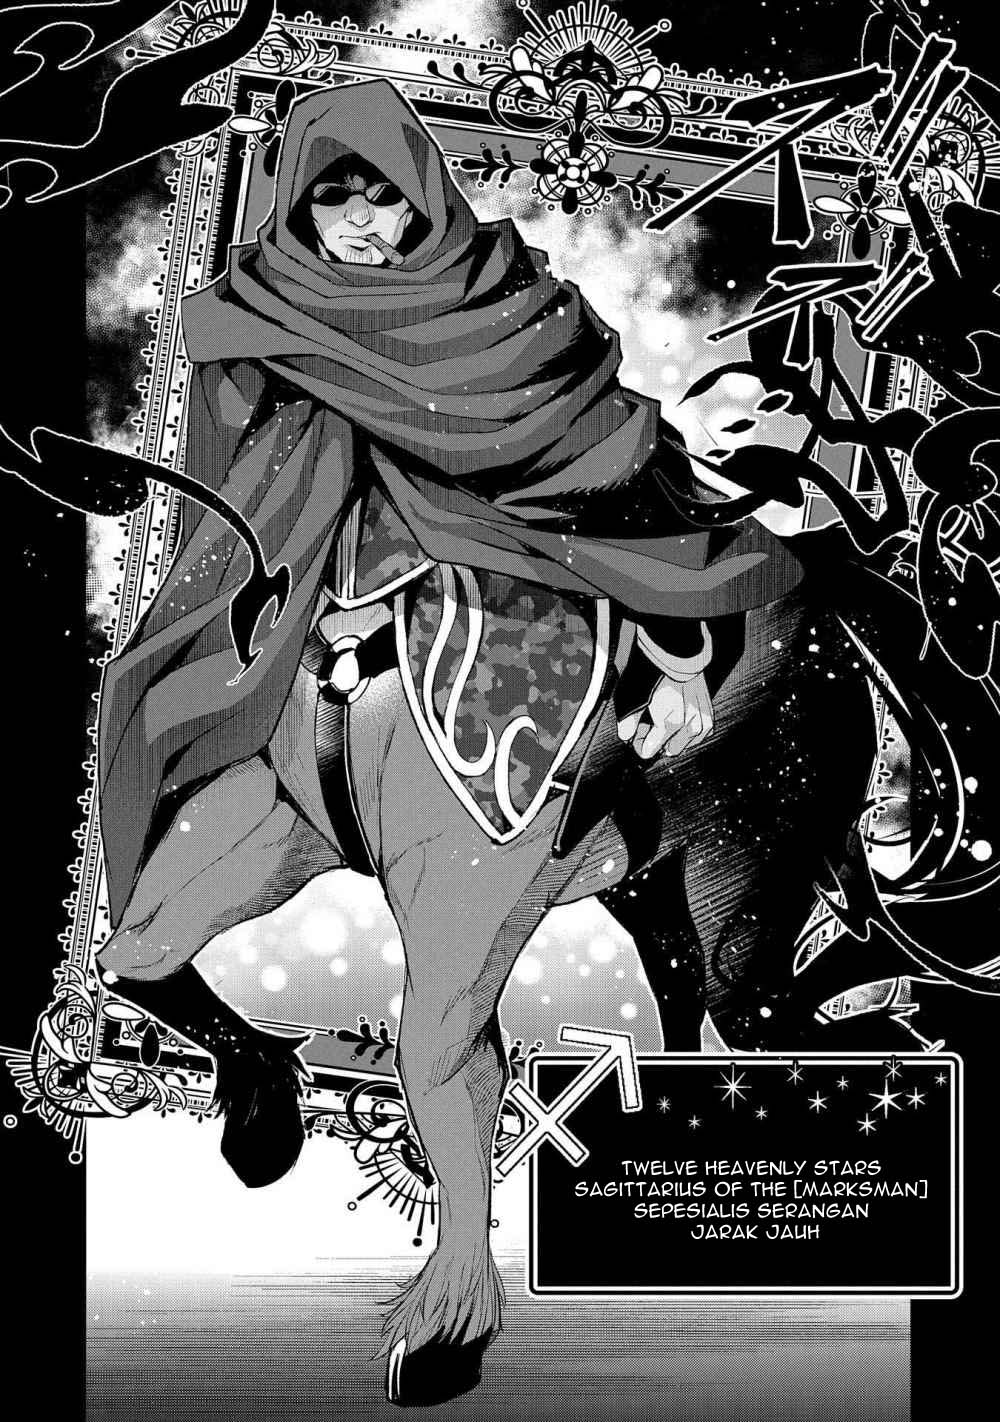 Yasei no Last Boss ga Arawareta! Chapter 29.1